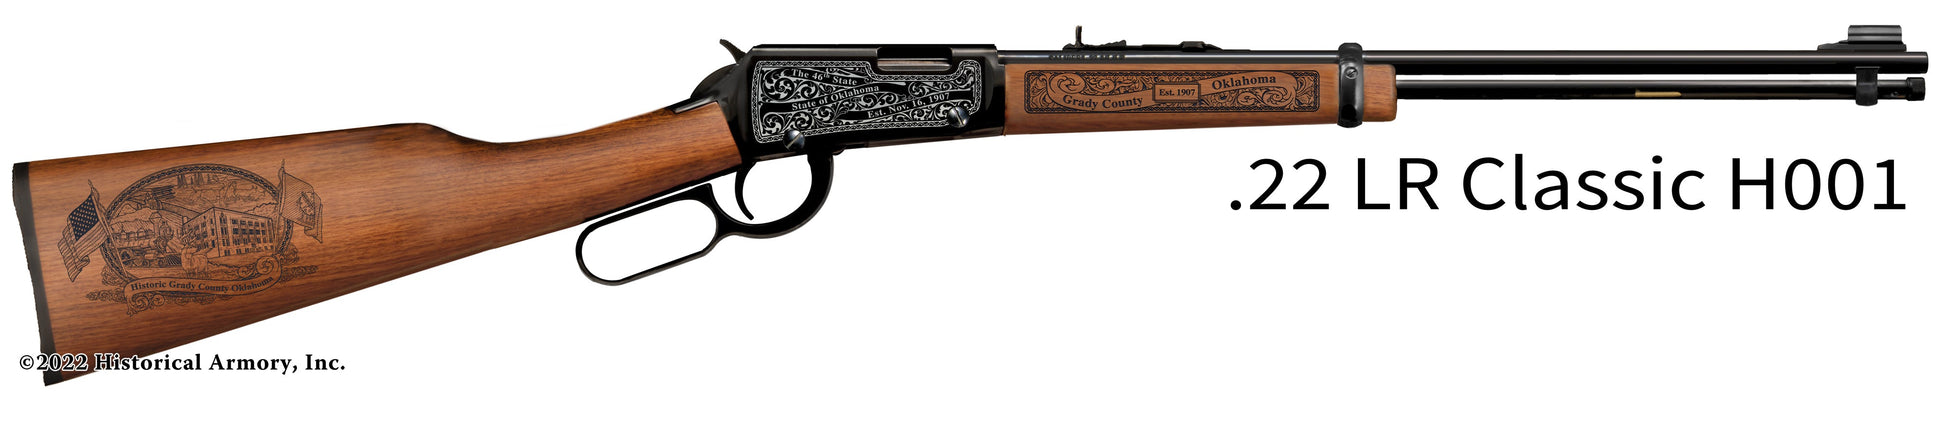 Grady County Oklahoma Engraved Henry H001 Rifle